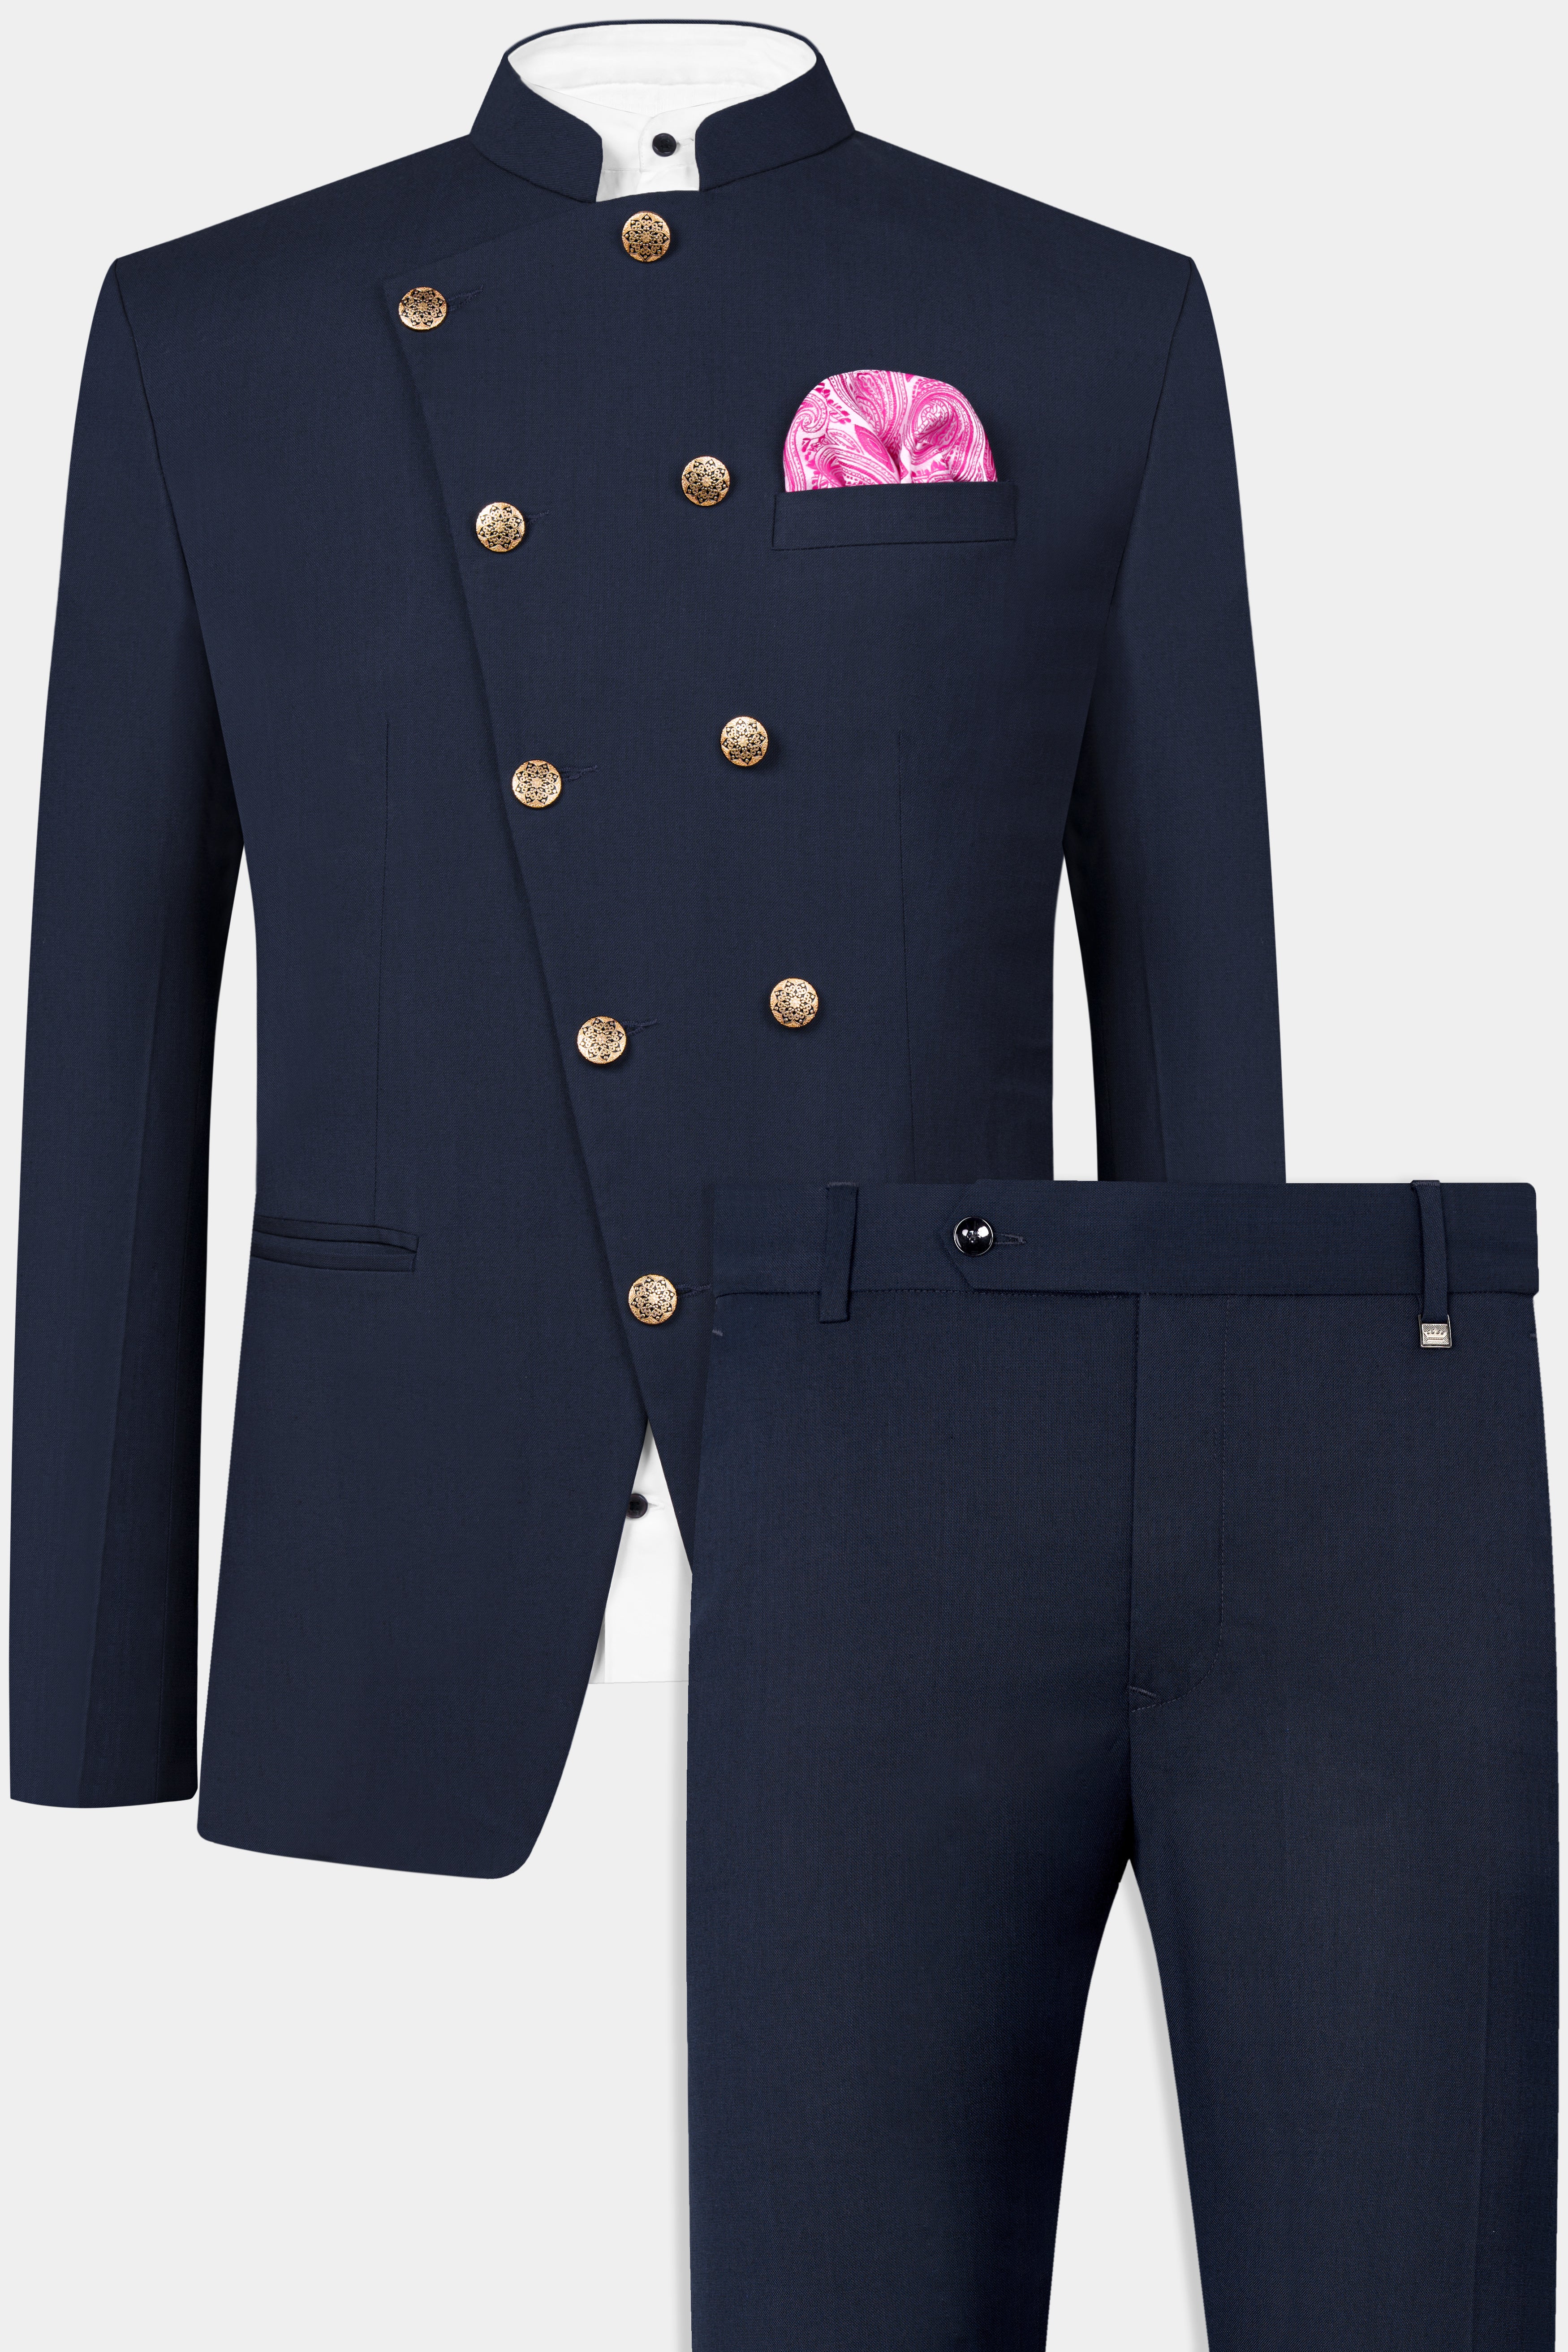 Cinder Blue Wool Rich Cross Placket Bandhgala Suit